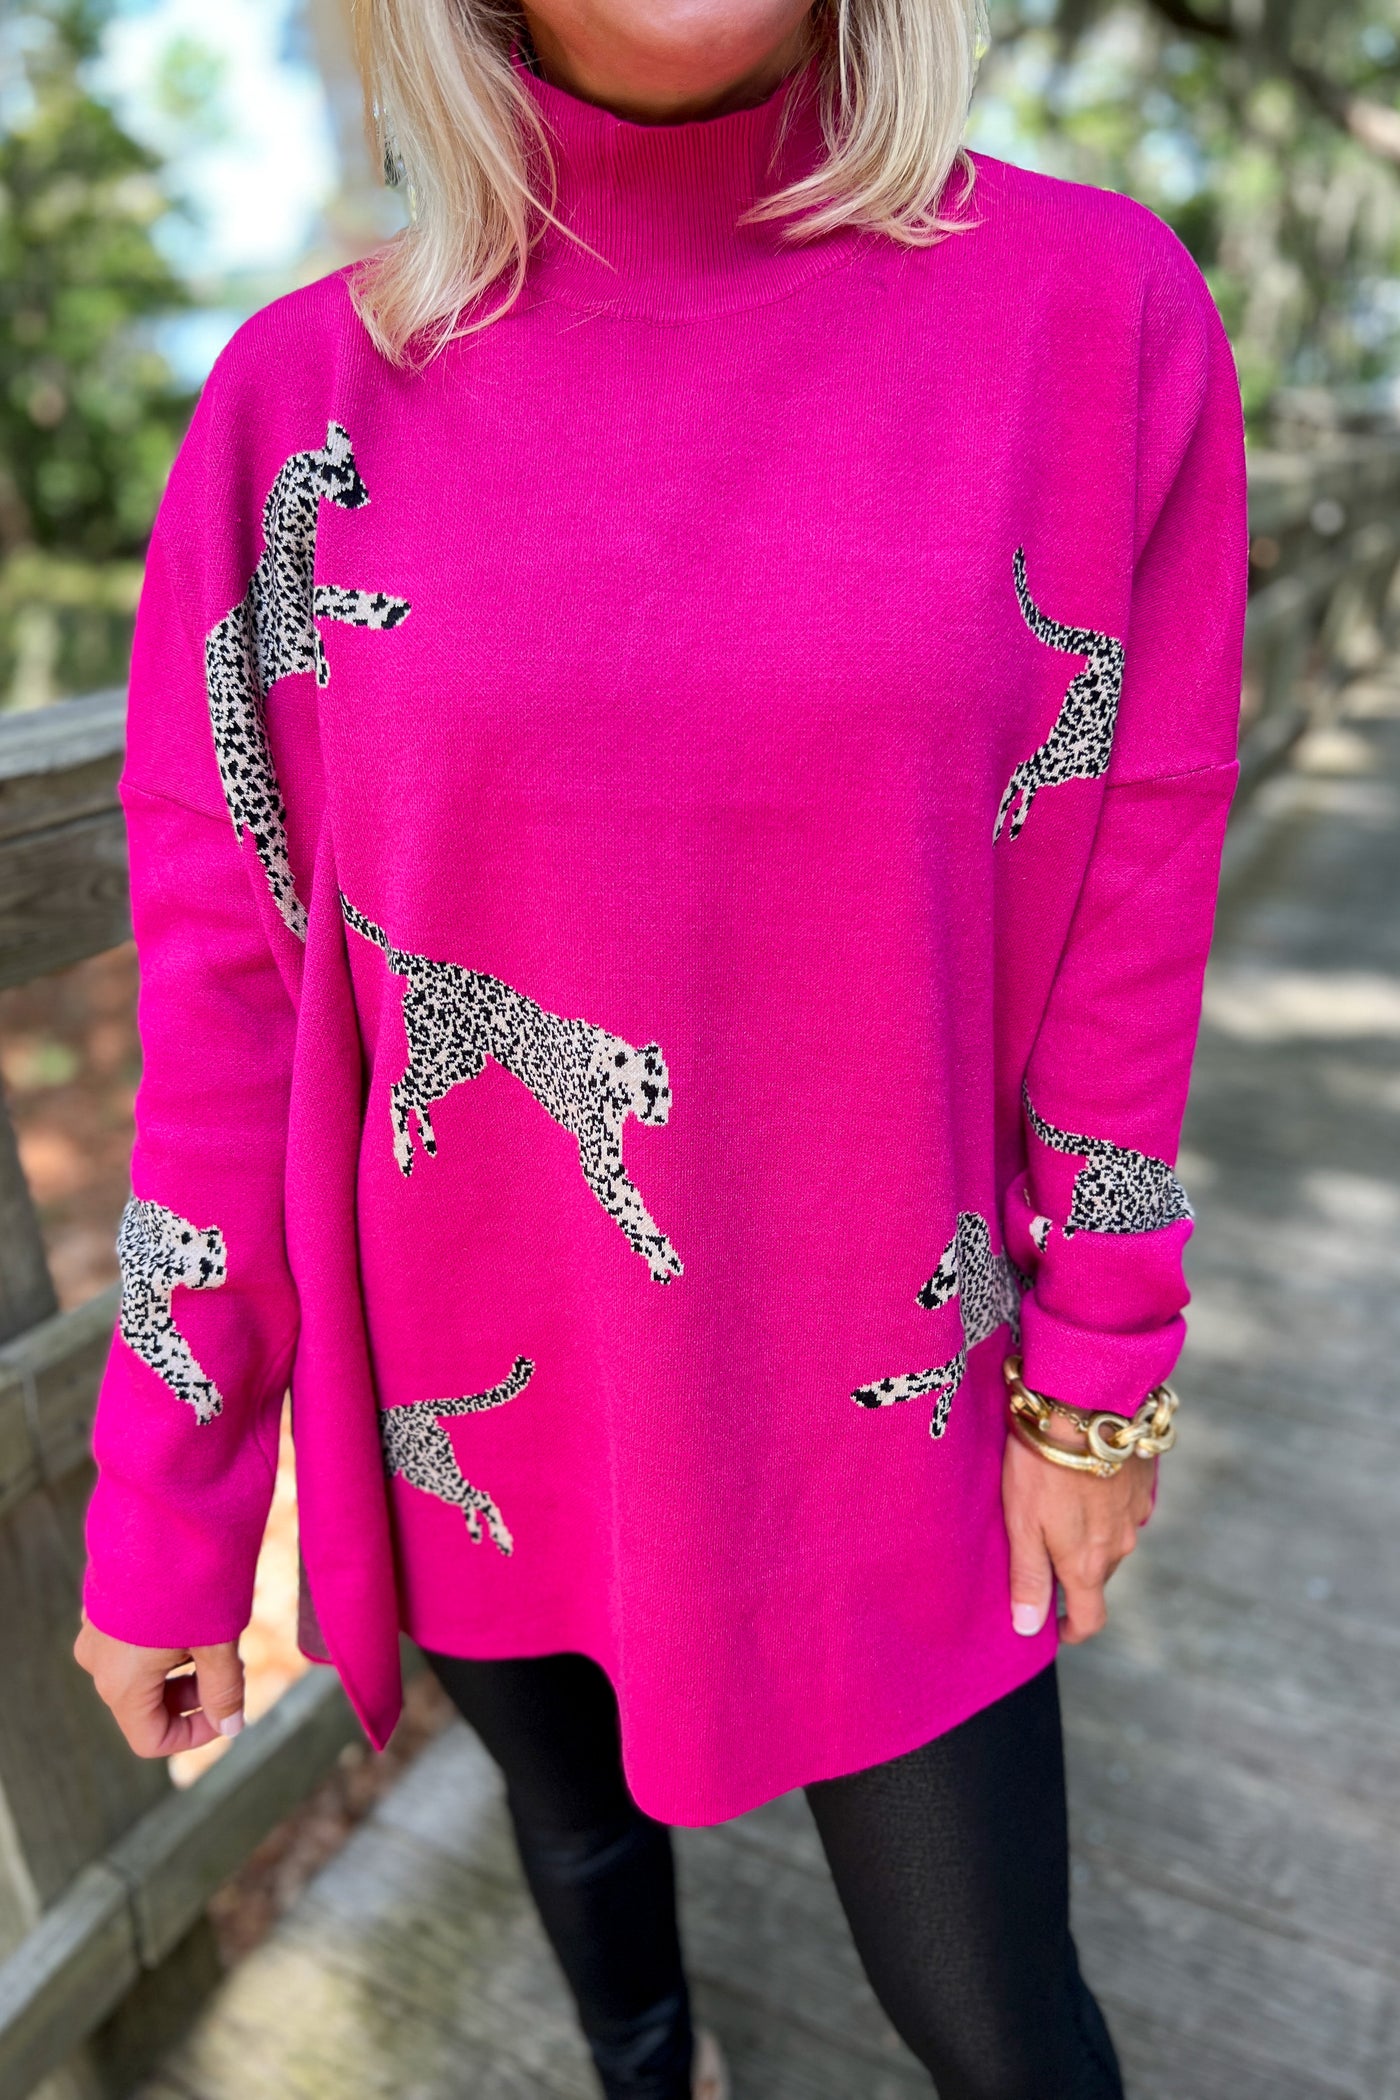 McCartney sweater, hot pink